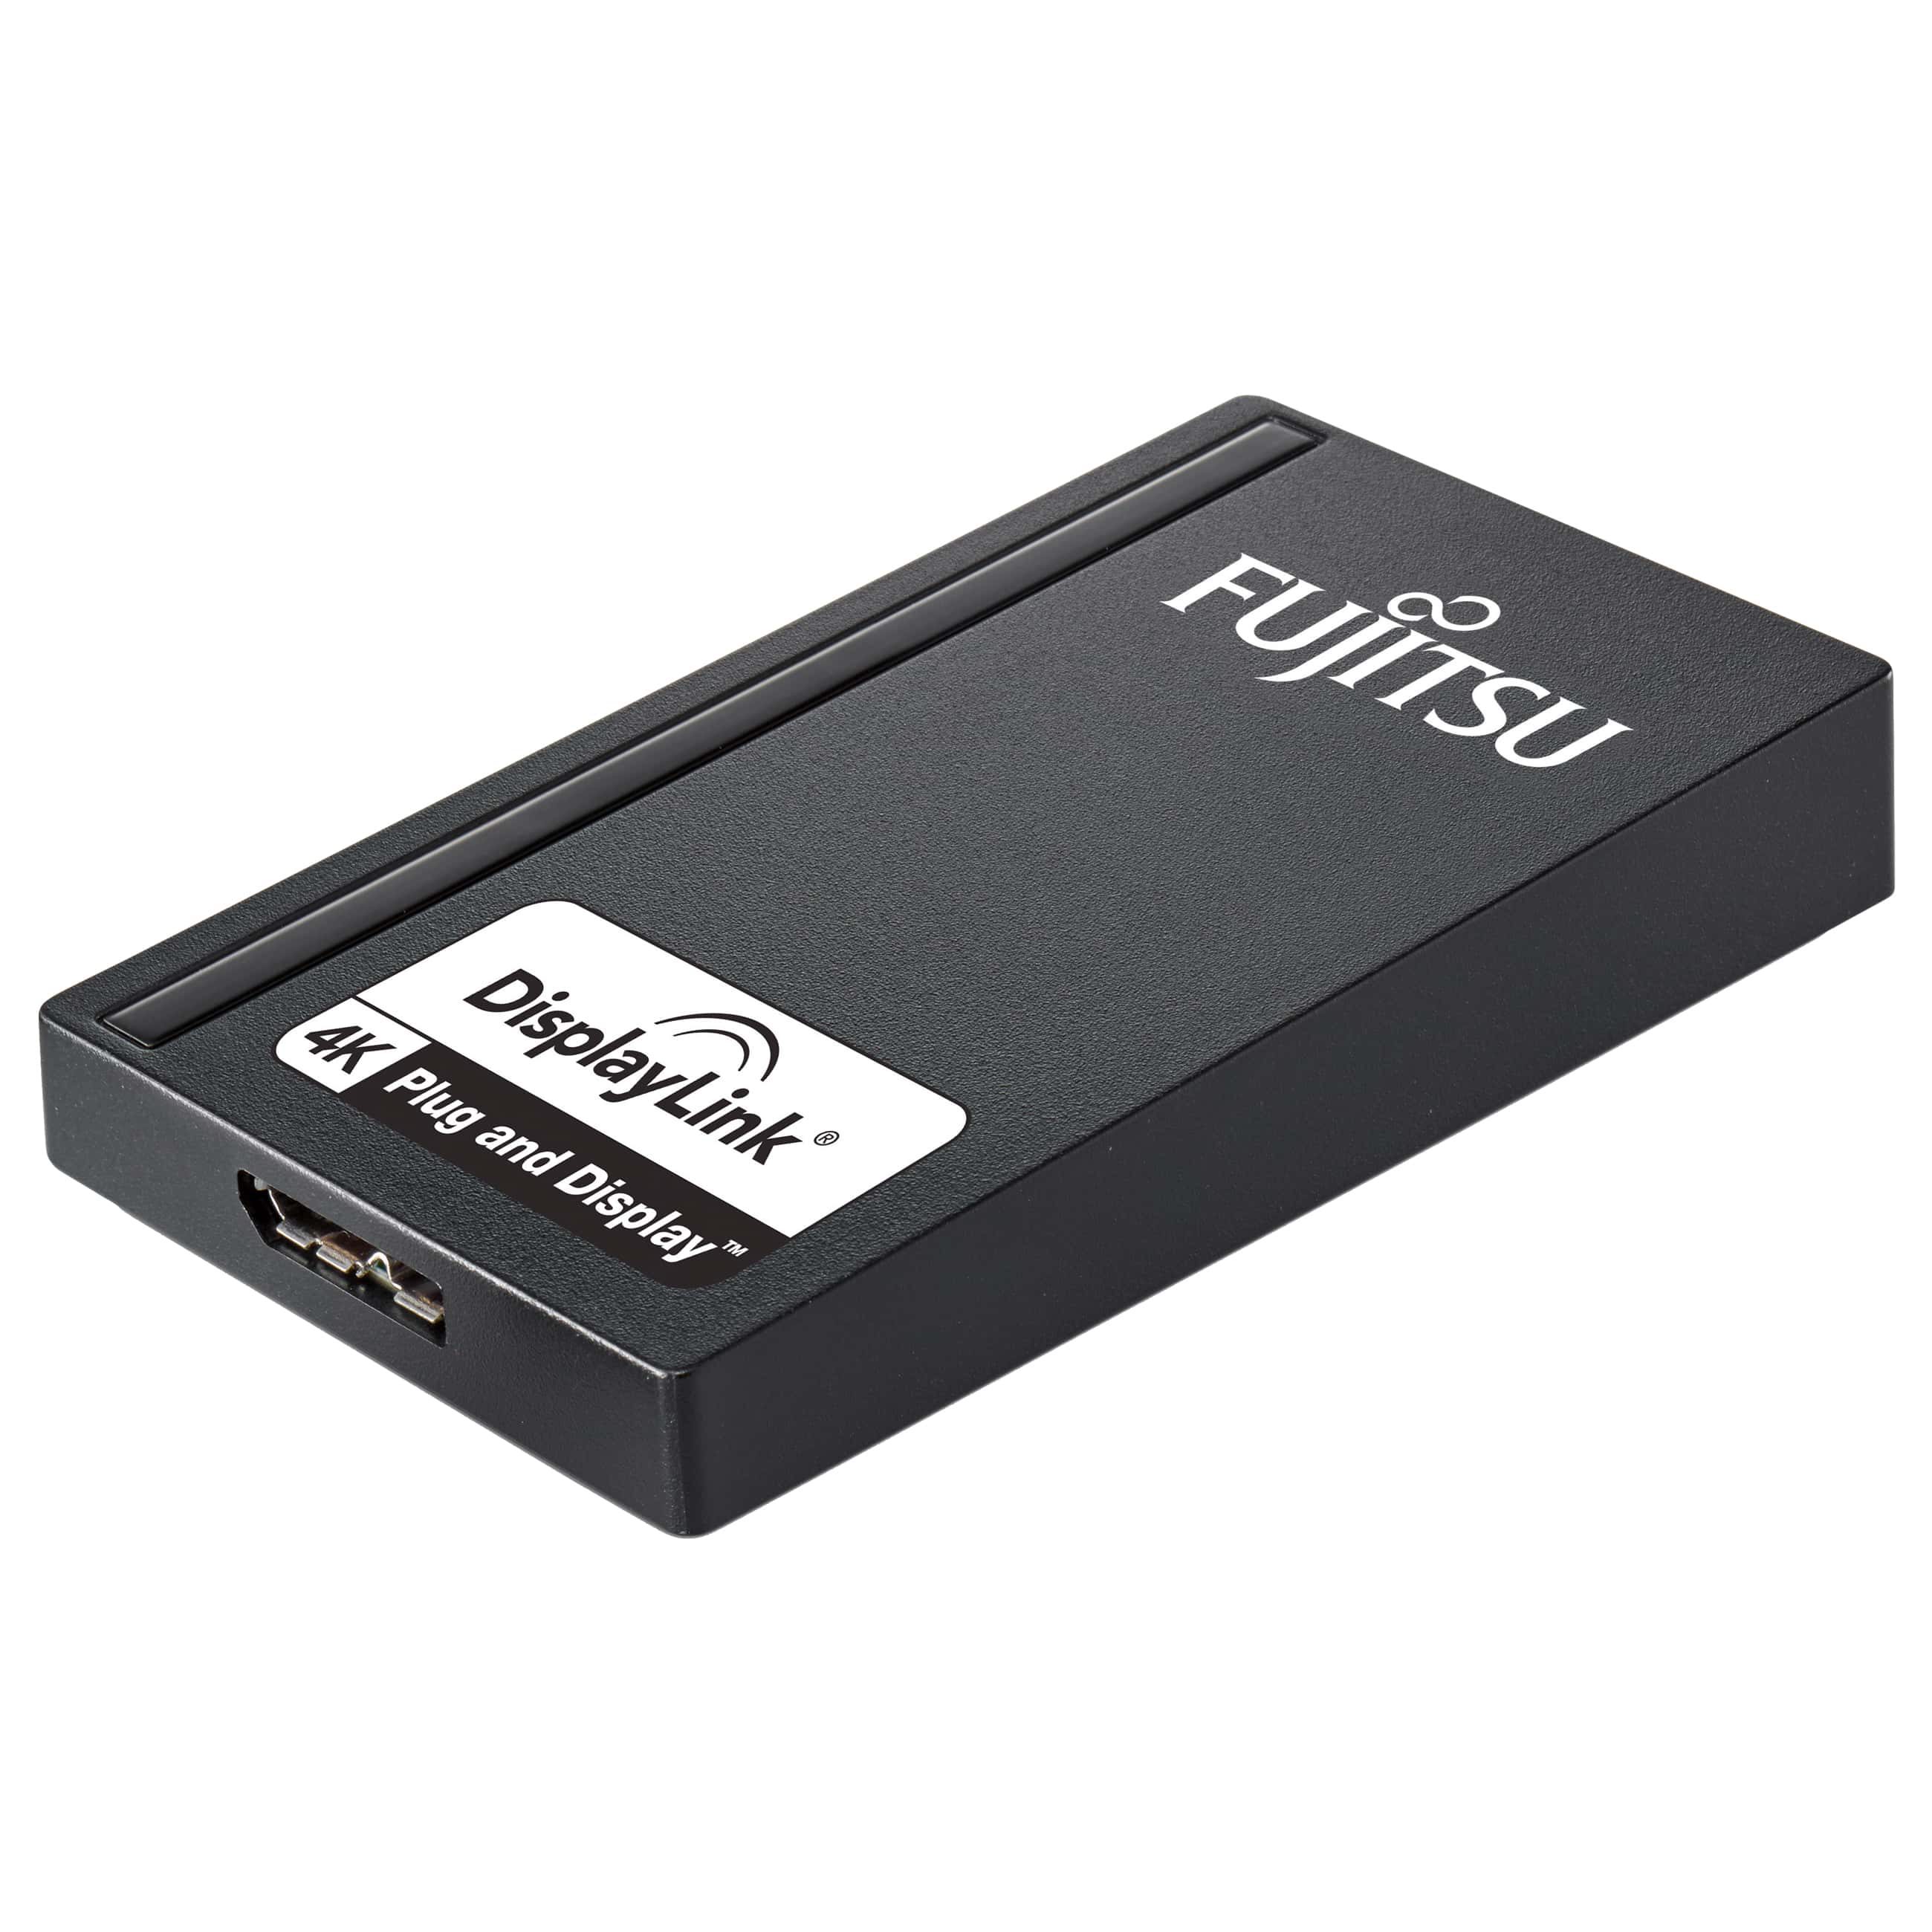 Fujitsu USB 3.0 auf DisplayPort Adapter